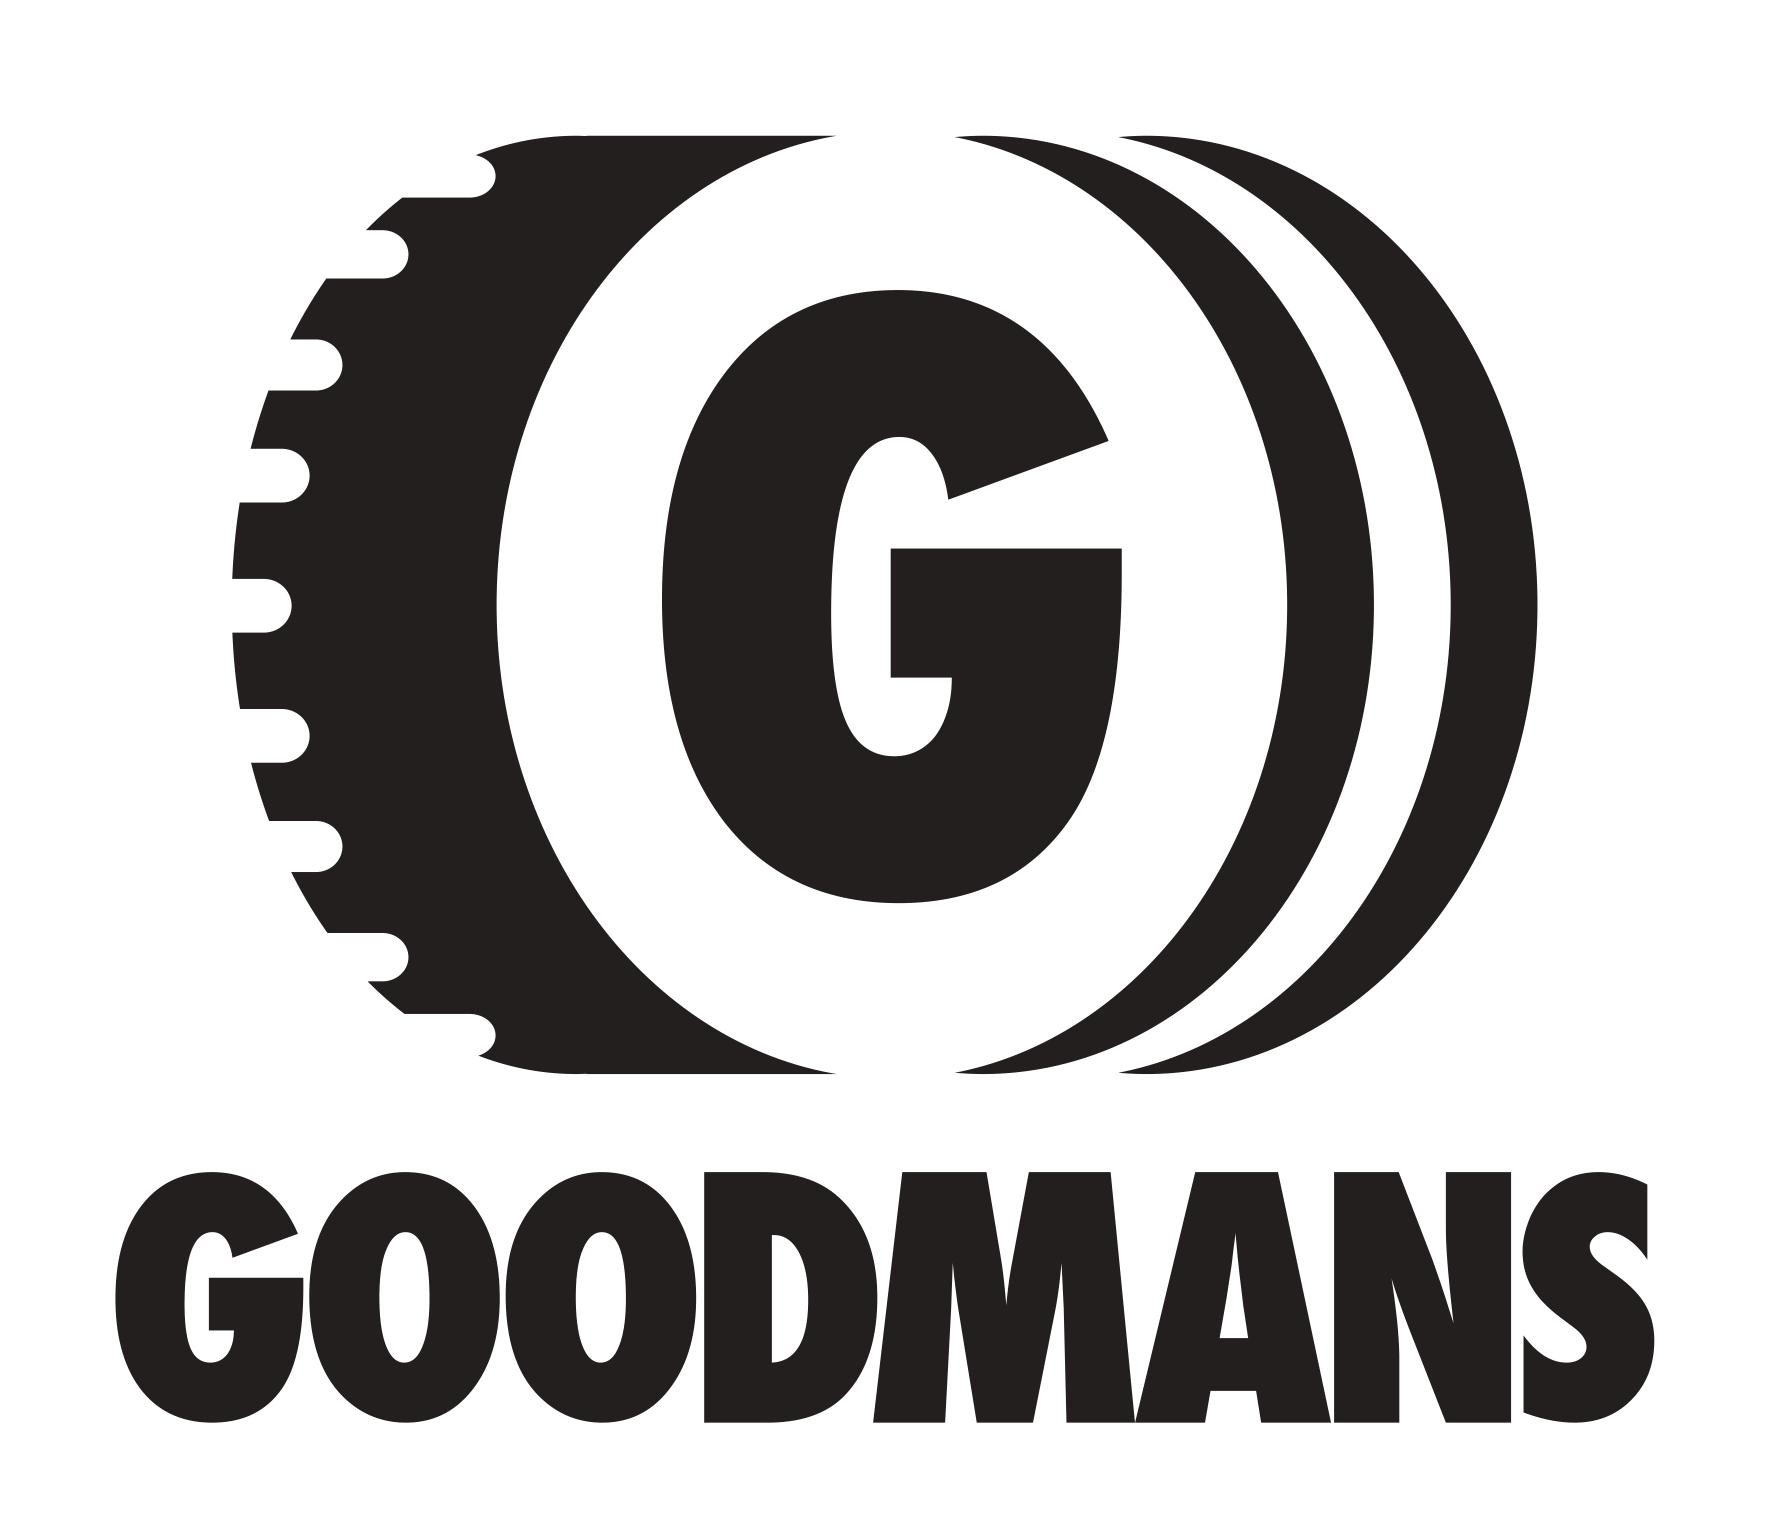 Goodmans_logo_portrait Pic.jpg